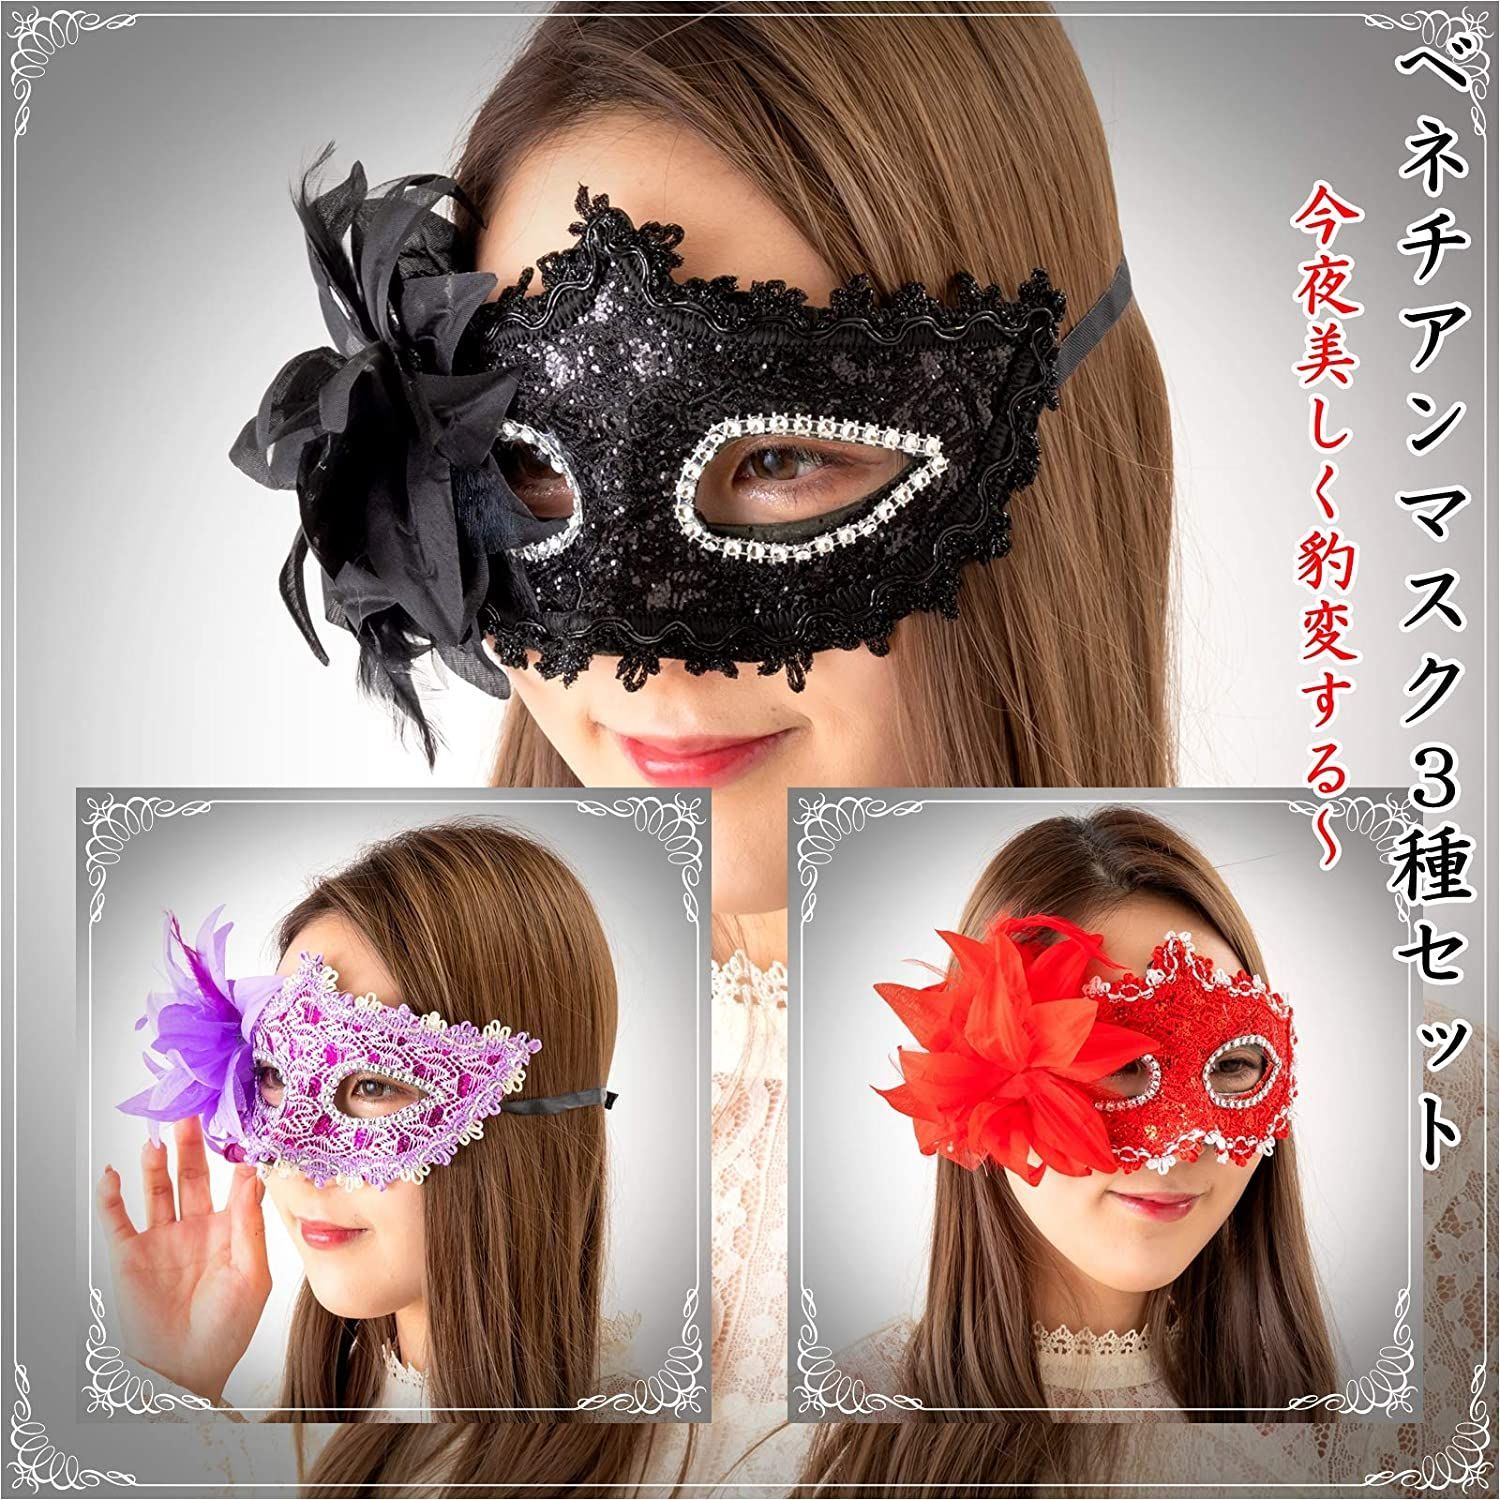 Eiza 仮面 コスプレ ベネチアンマスク 3個セット ハロウィン アイマスク